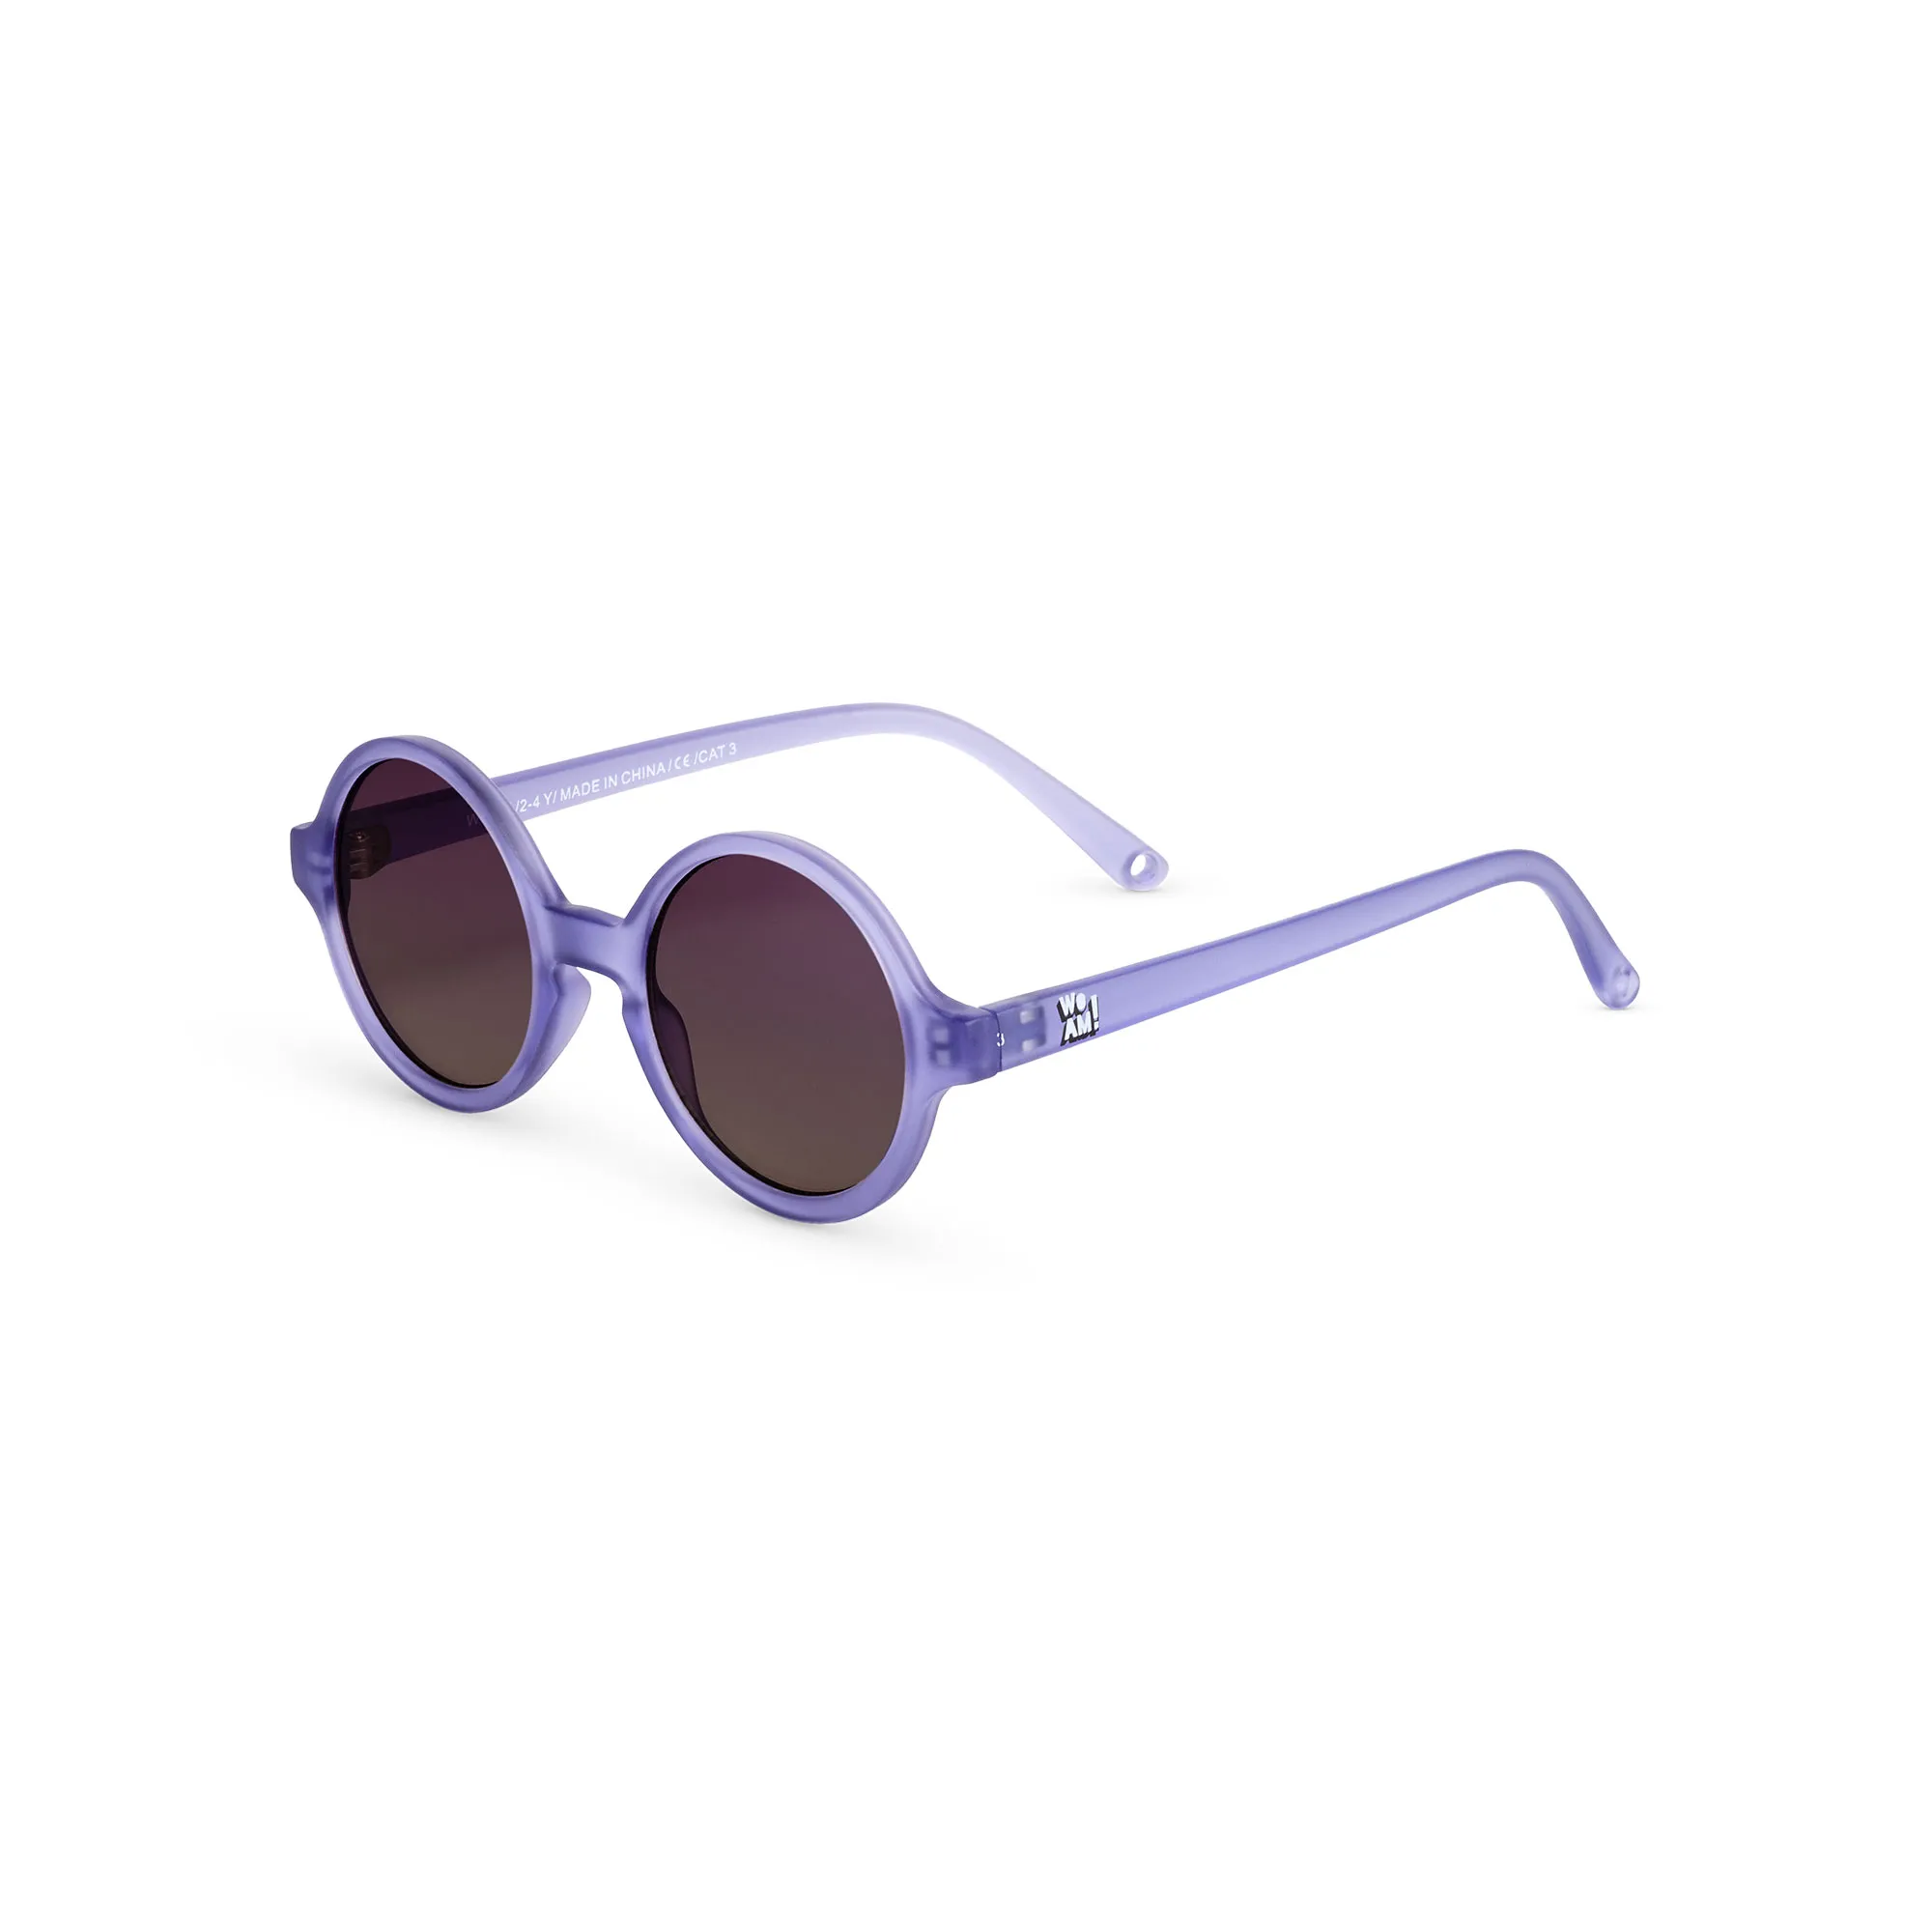 WOAM slnečné okuliare 2-4 roky - Purple 1×1 ks, detské slnečné okuliare